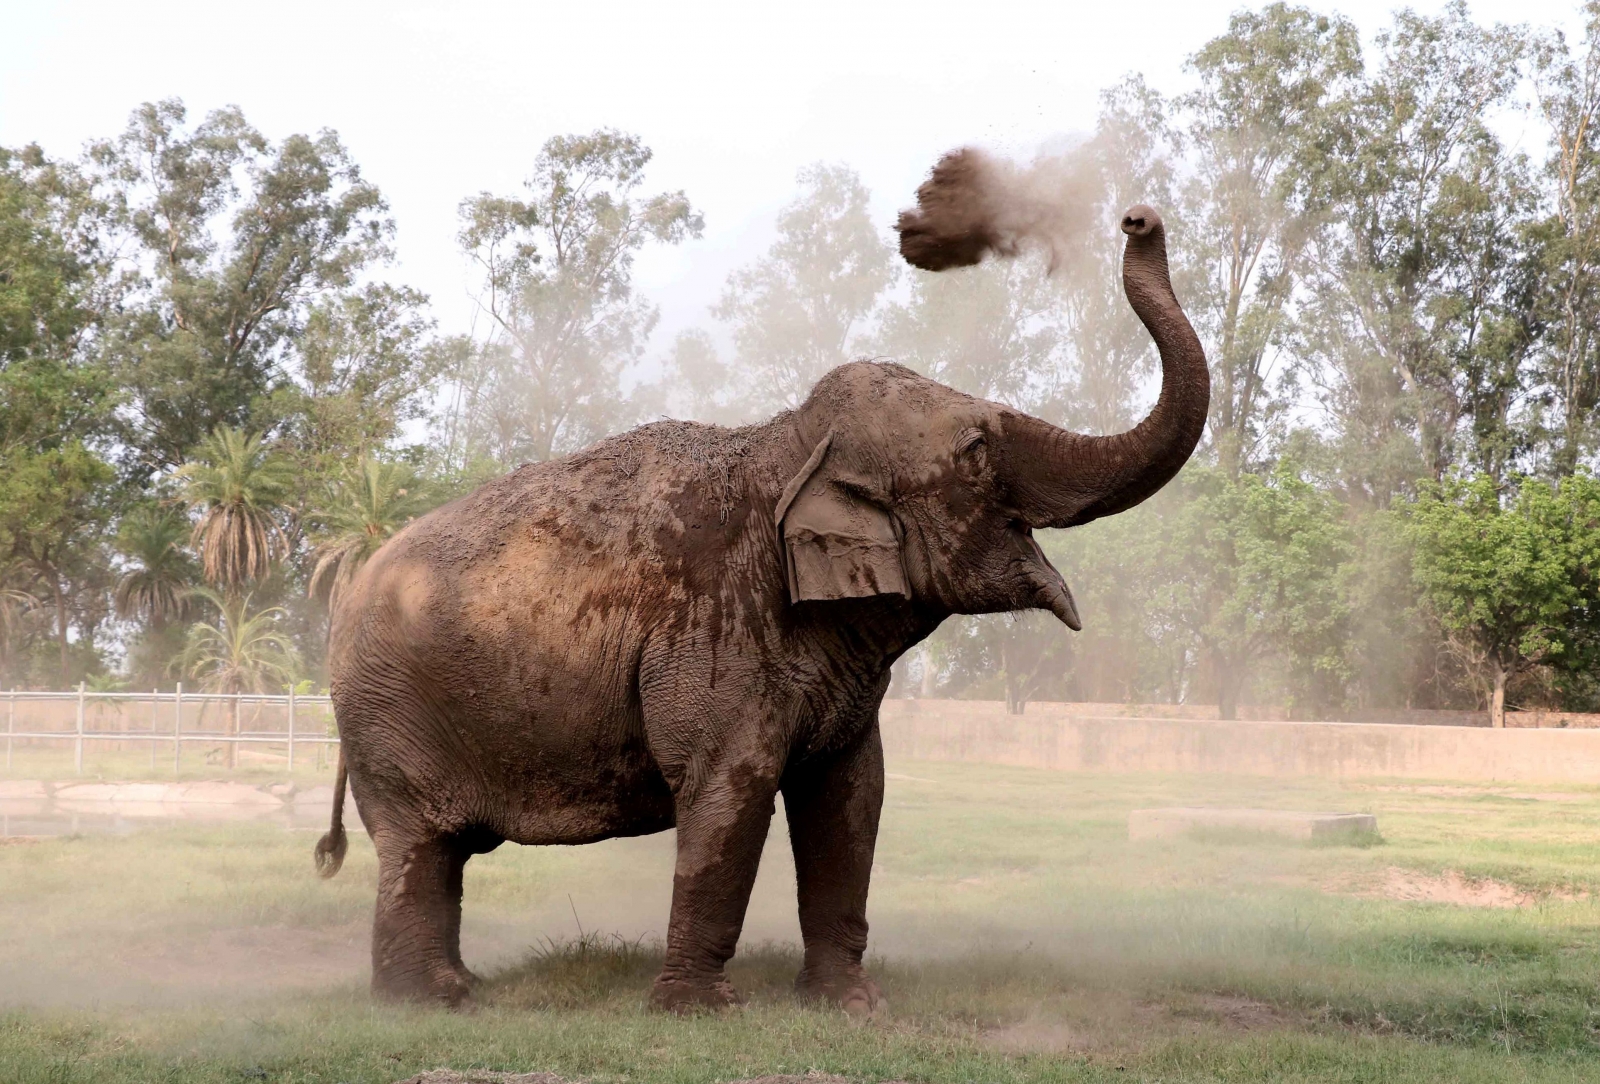 Elephant gives himself dust bath